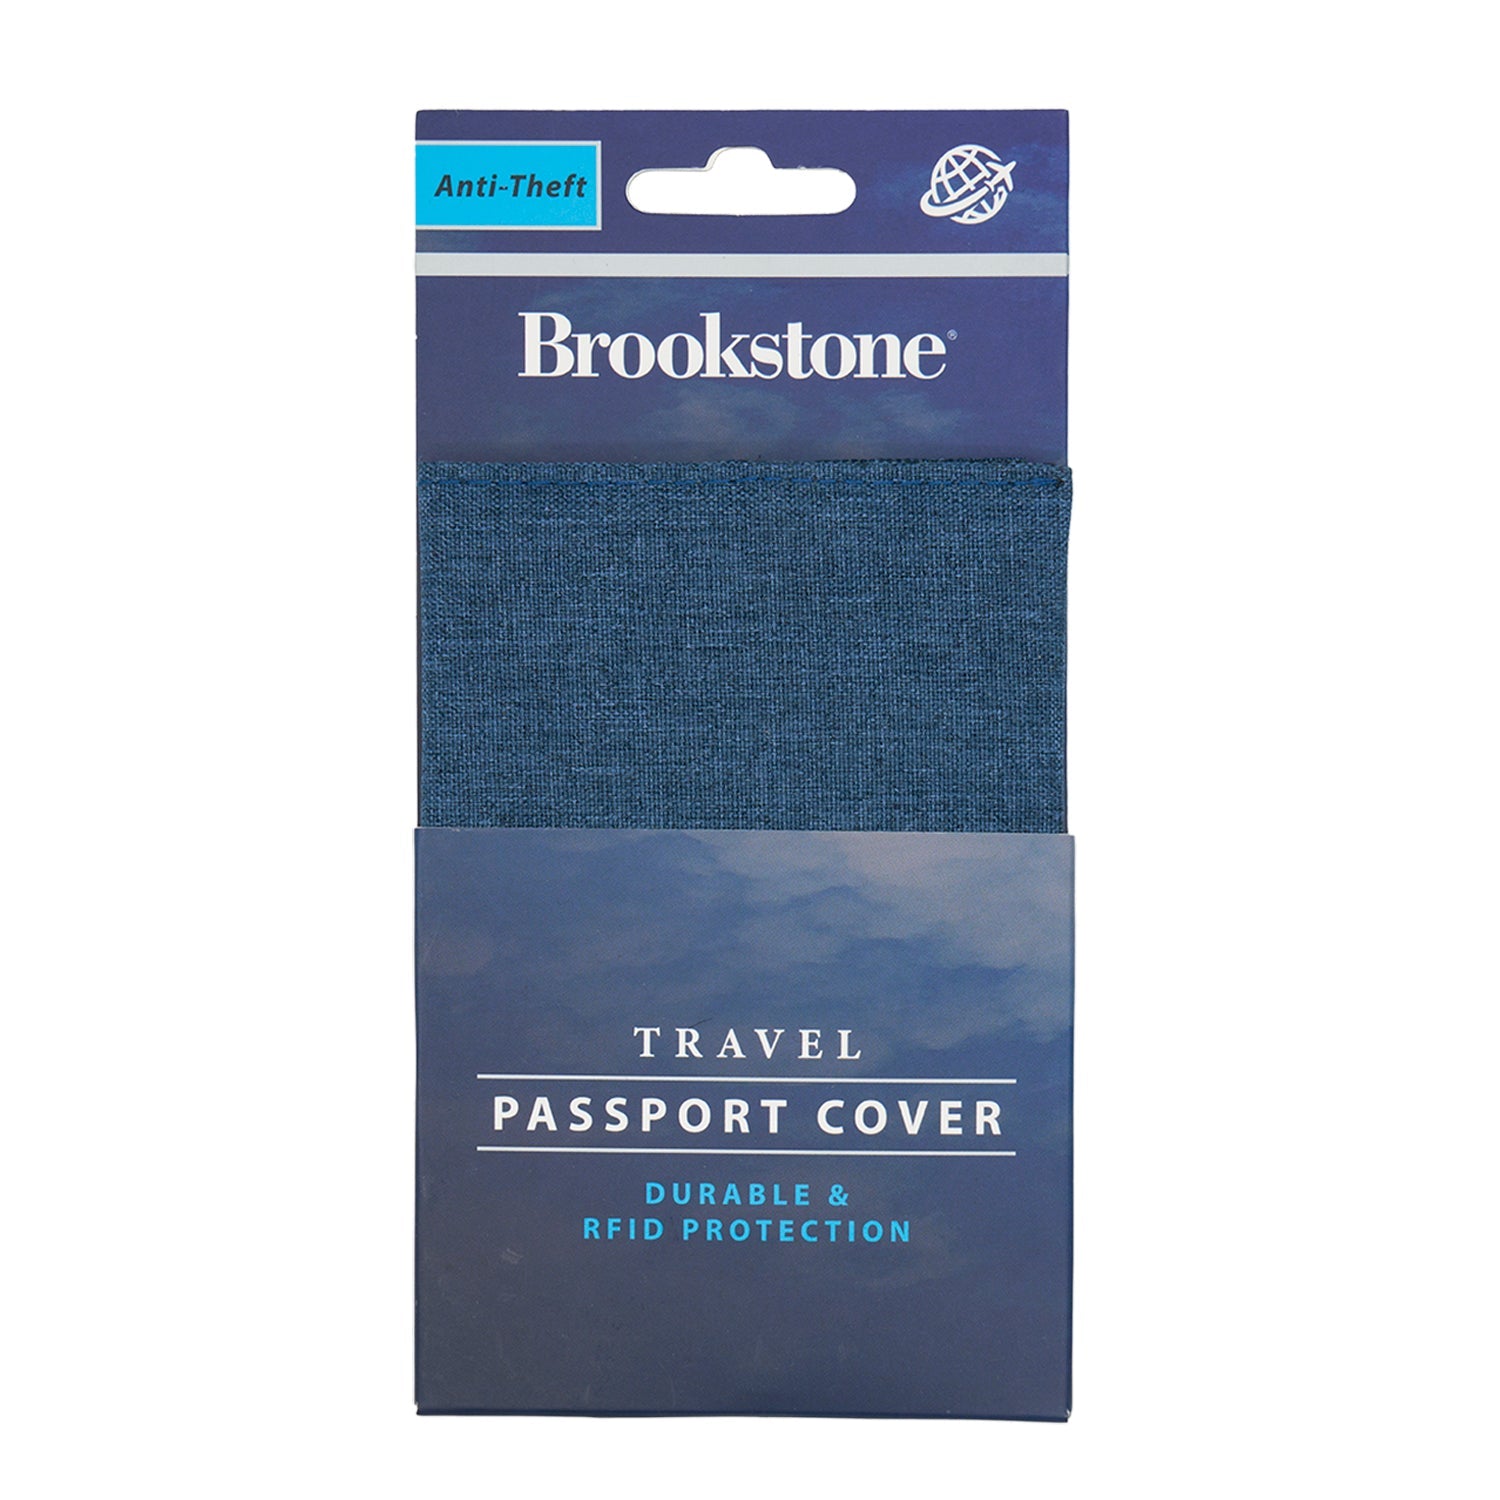 Brookstone Travel Passport Cover